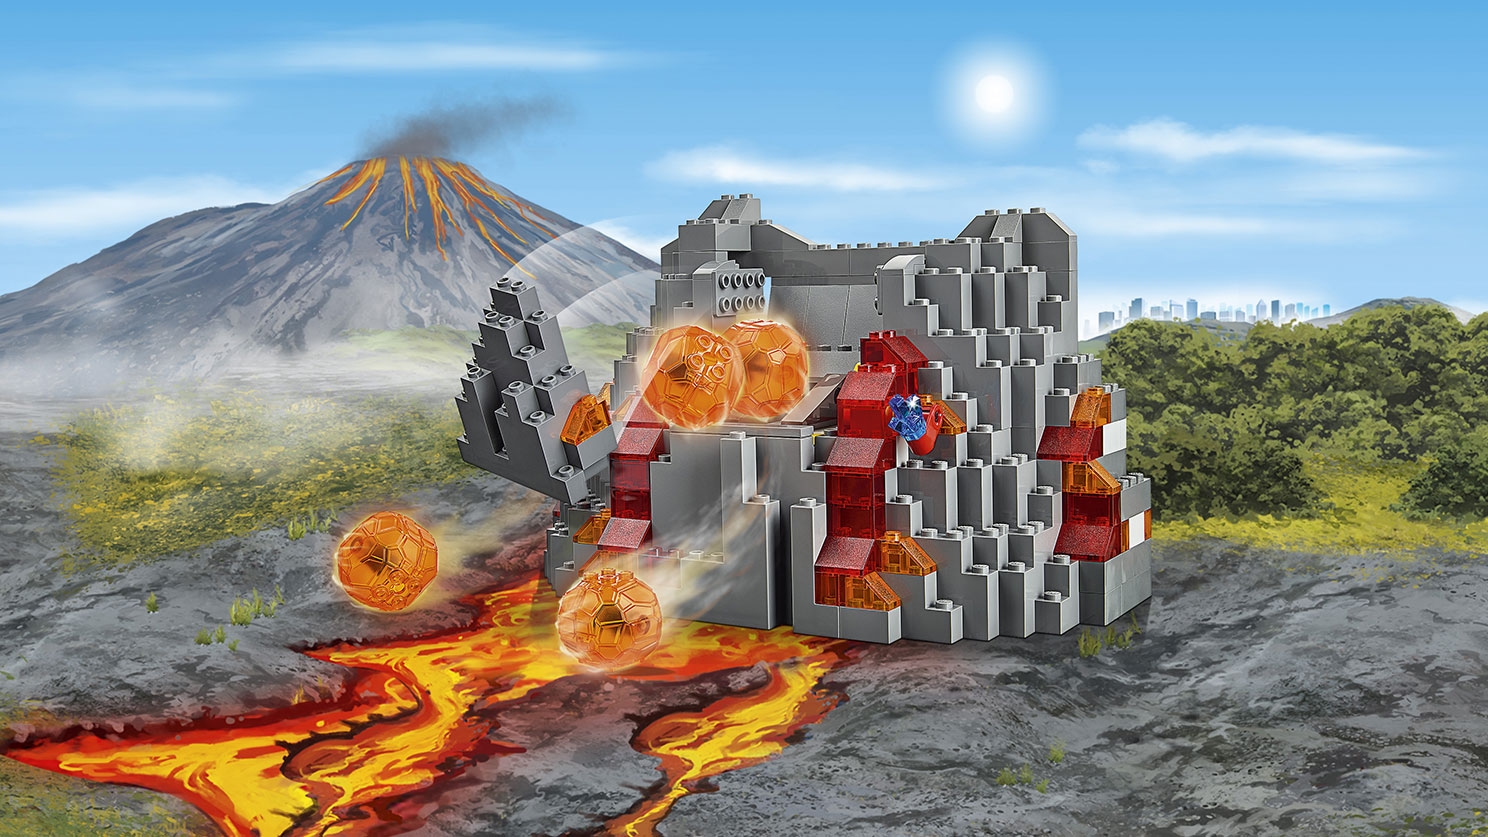 Vulkan – fragthelikopter 60125 - LEGO® City - LEGO.com for børn